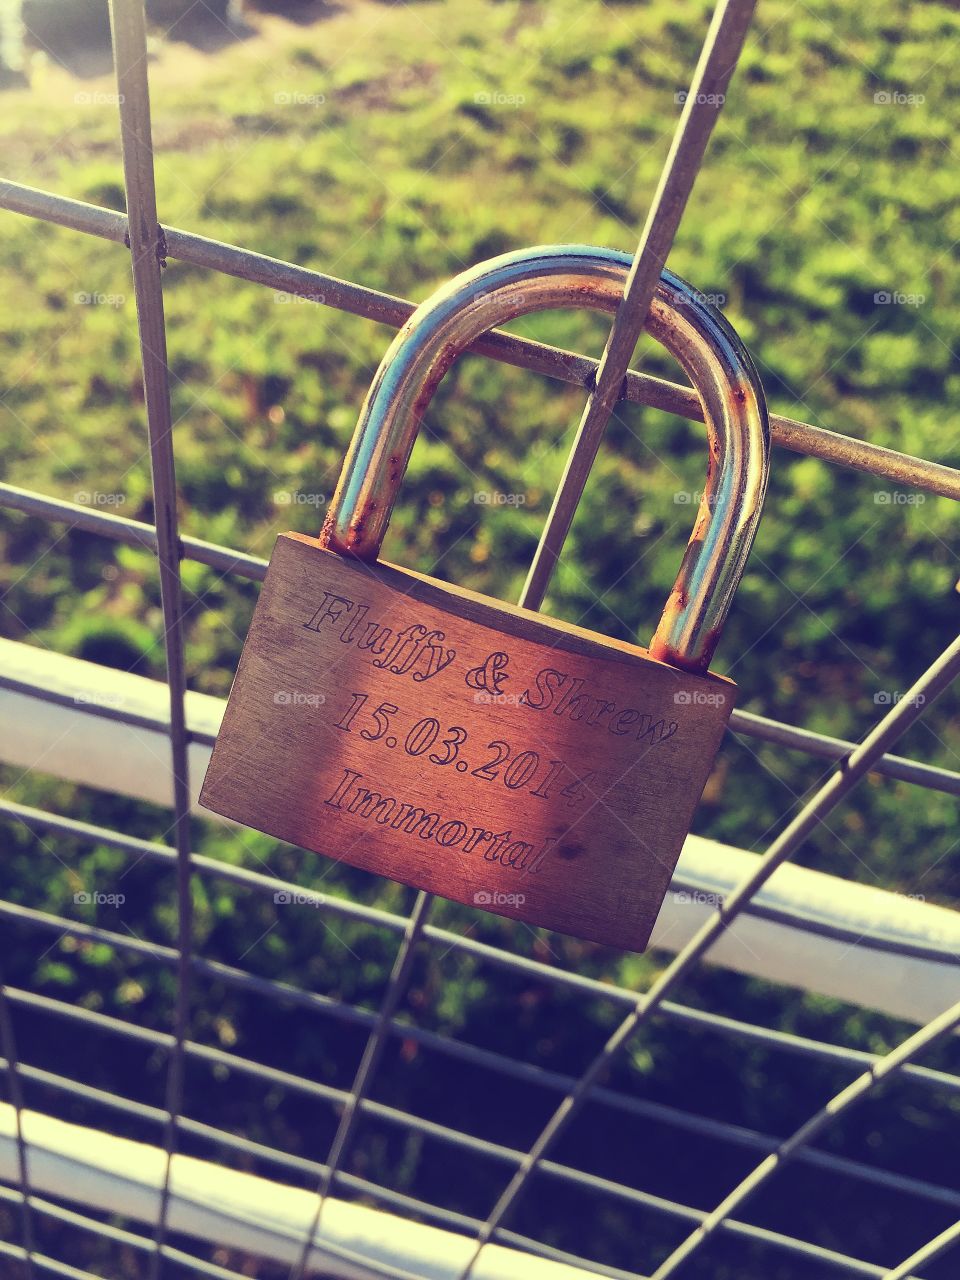 Love locks . This one caught my eye on a bridge overlooking Rudyard lake, England. 